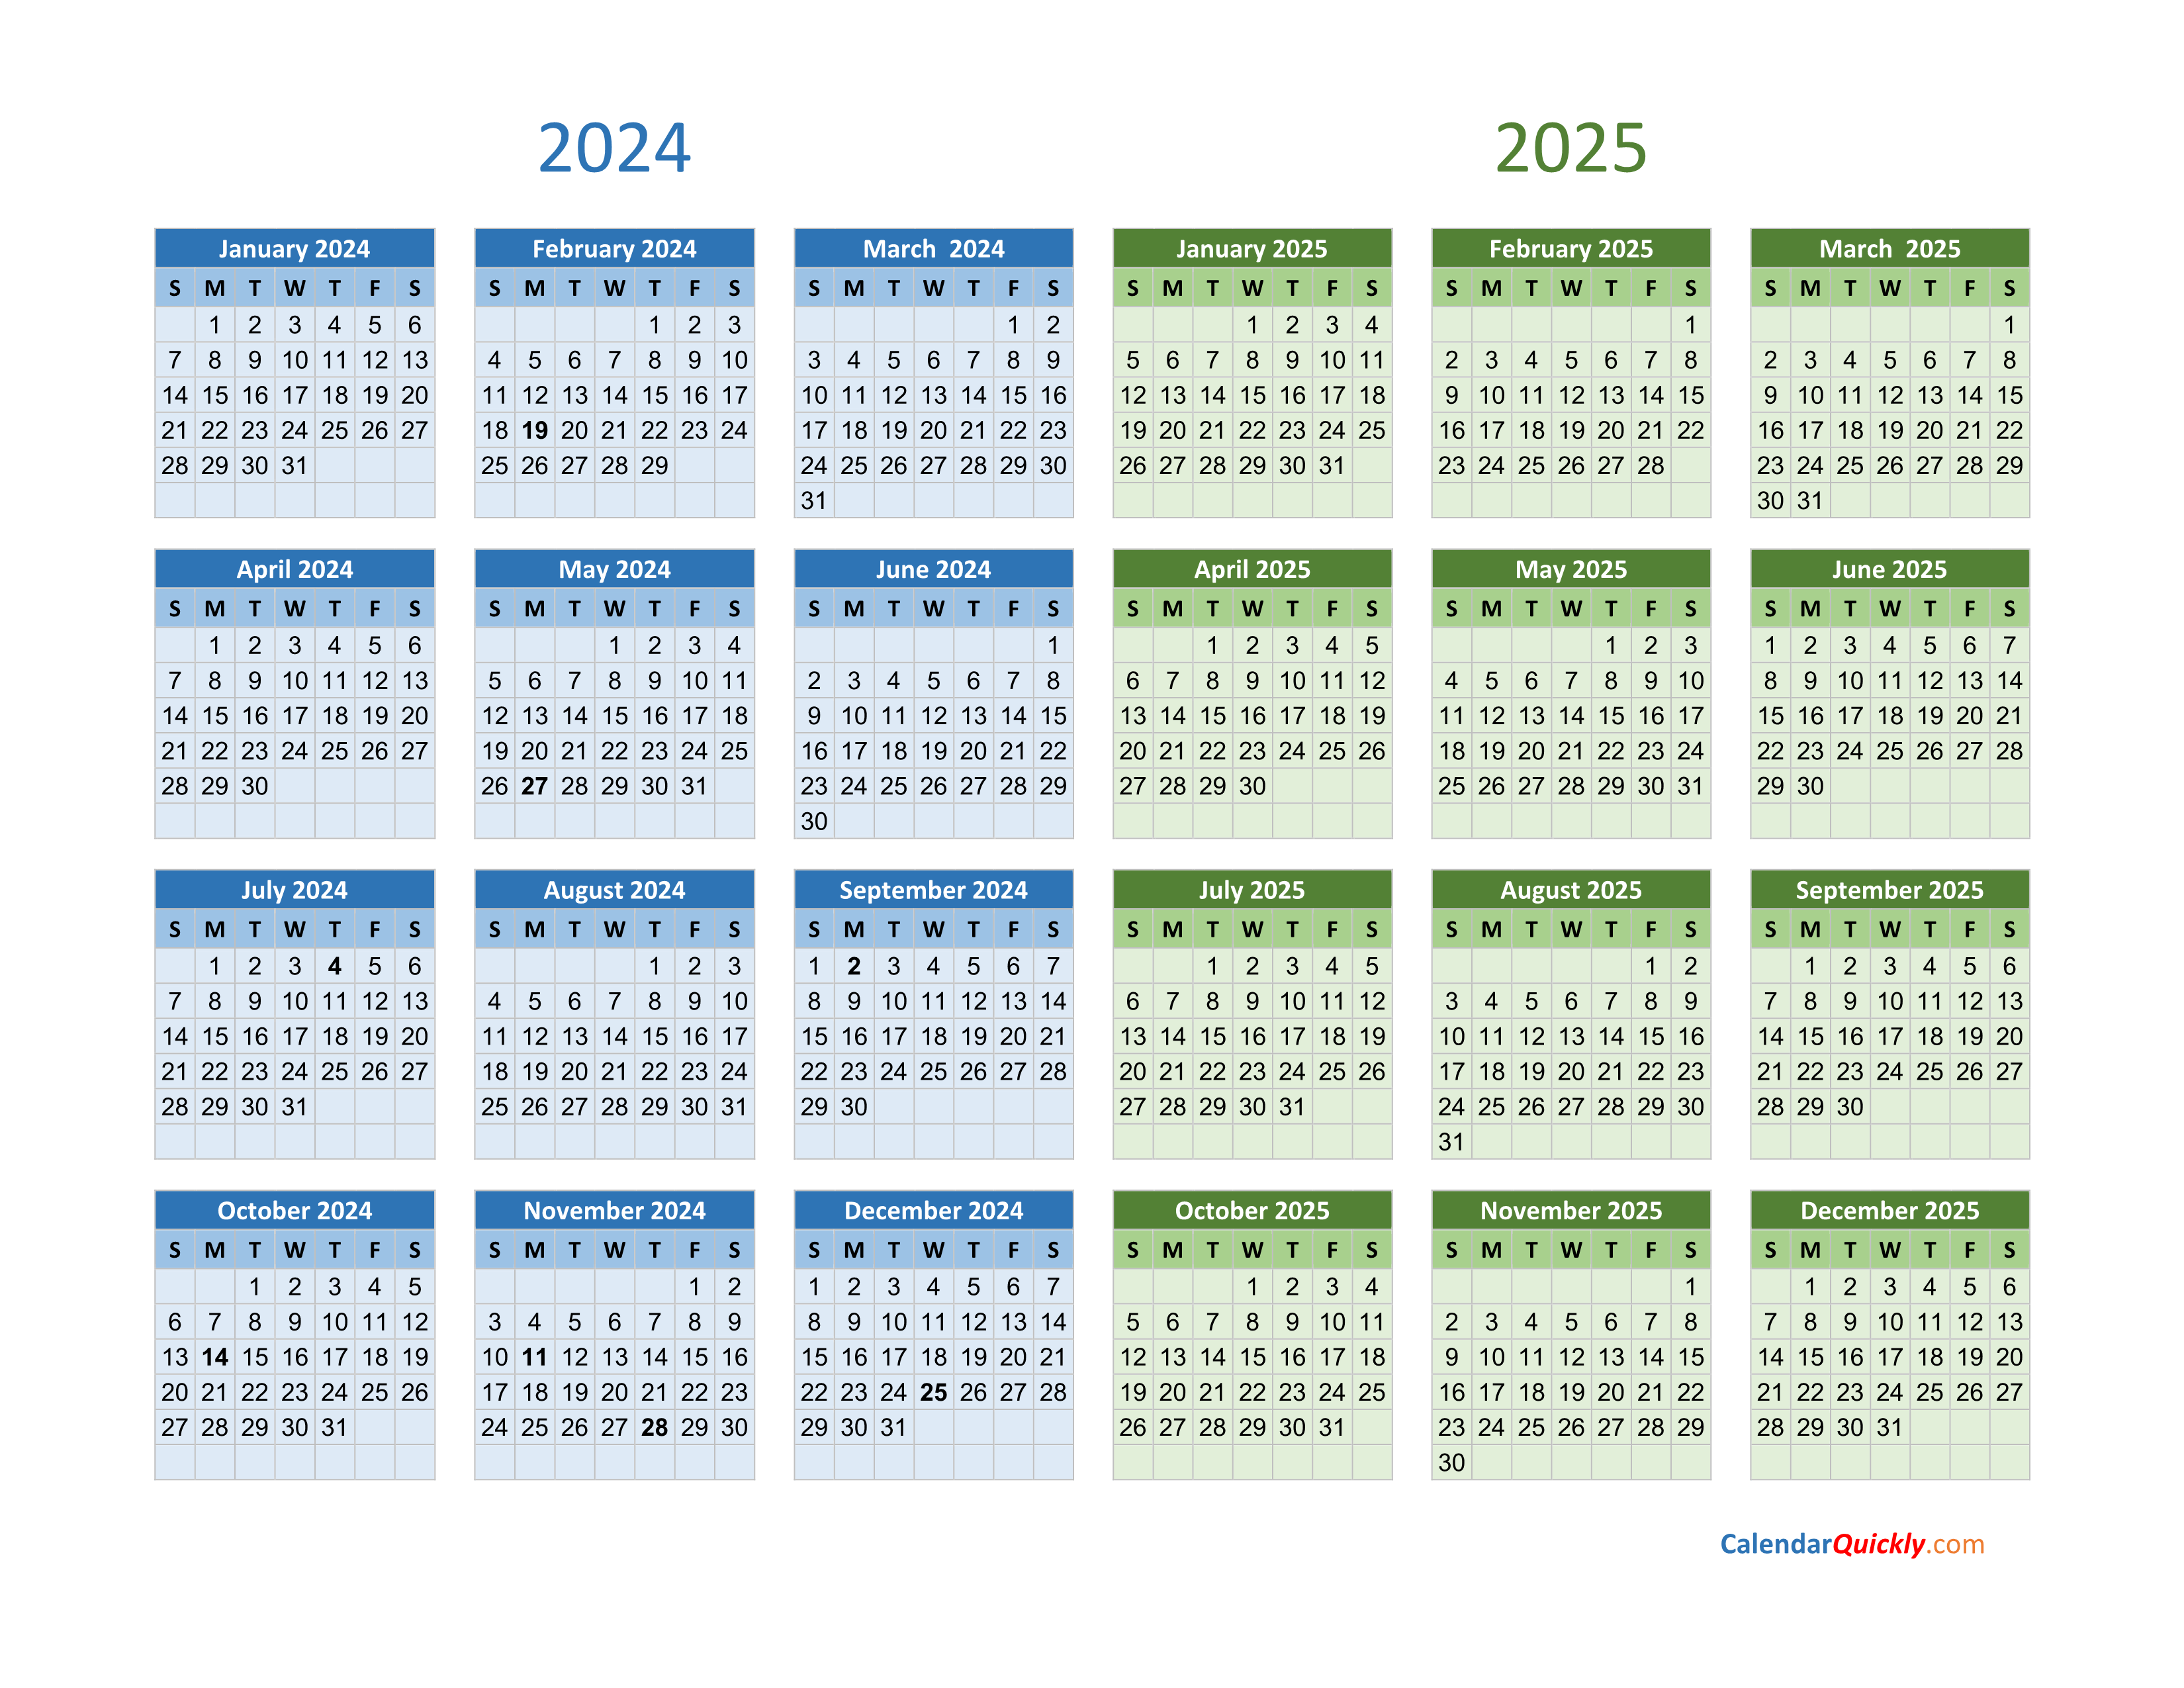 2024 And 2025 Calendar | Calendar Quickly for Free Printable Calendar 2024 And 2025 Pdf Download